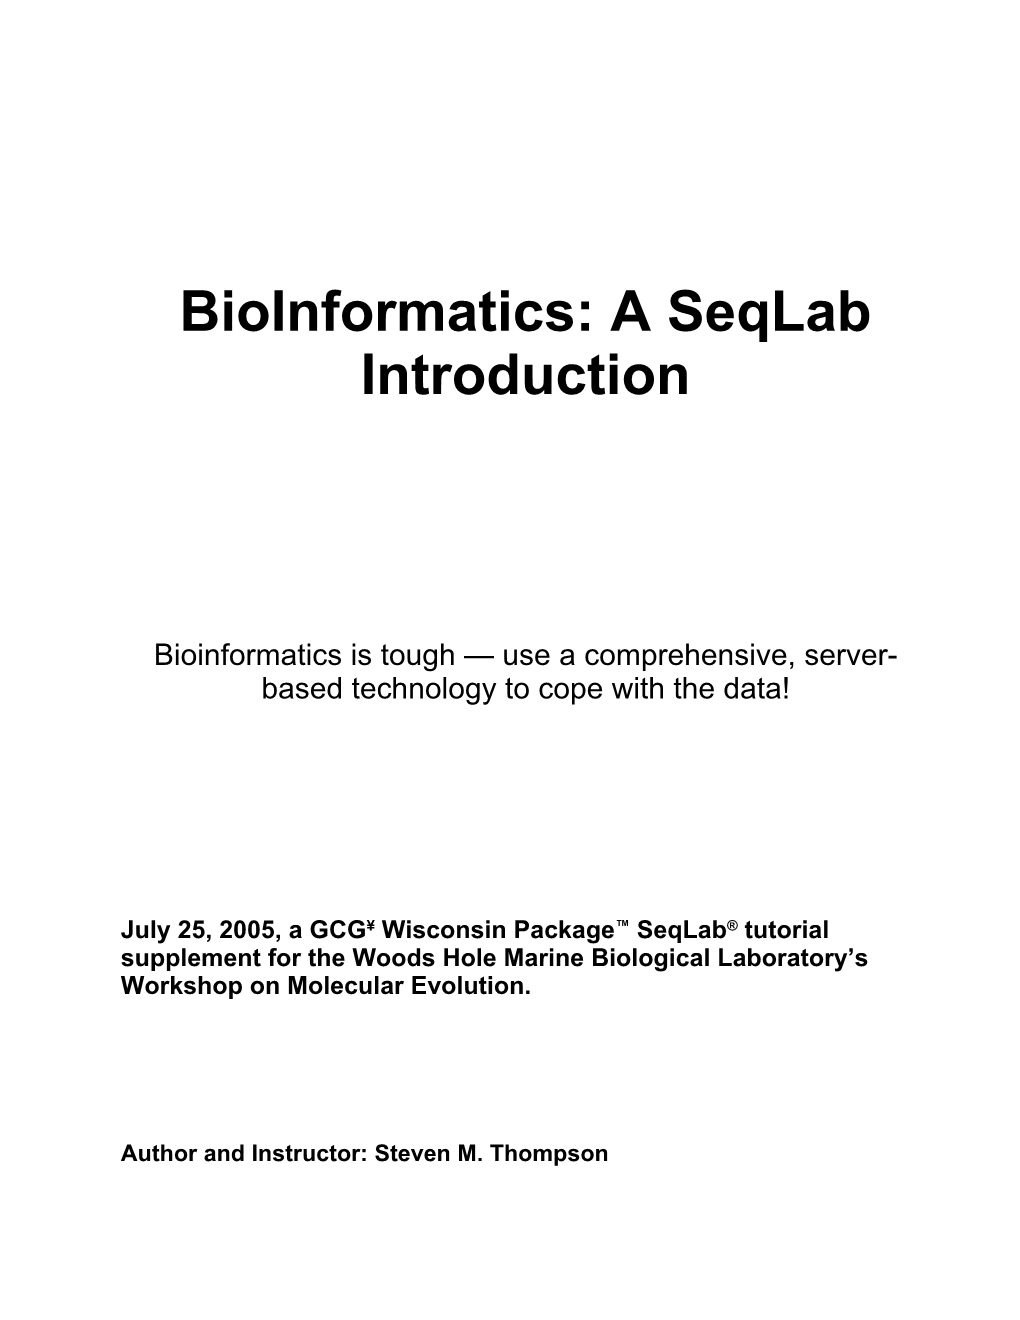 Bioinformatics Workshops: Seqlab Introduction